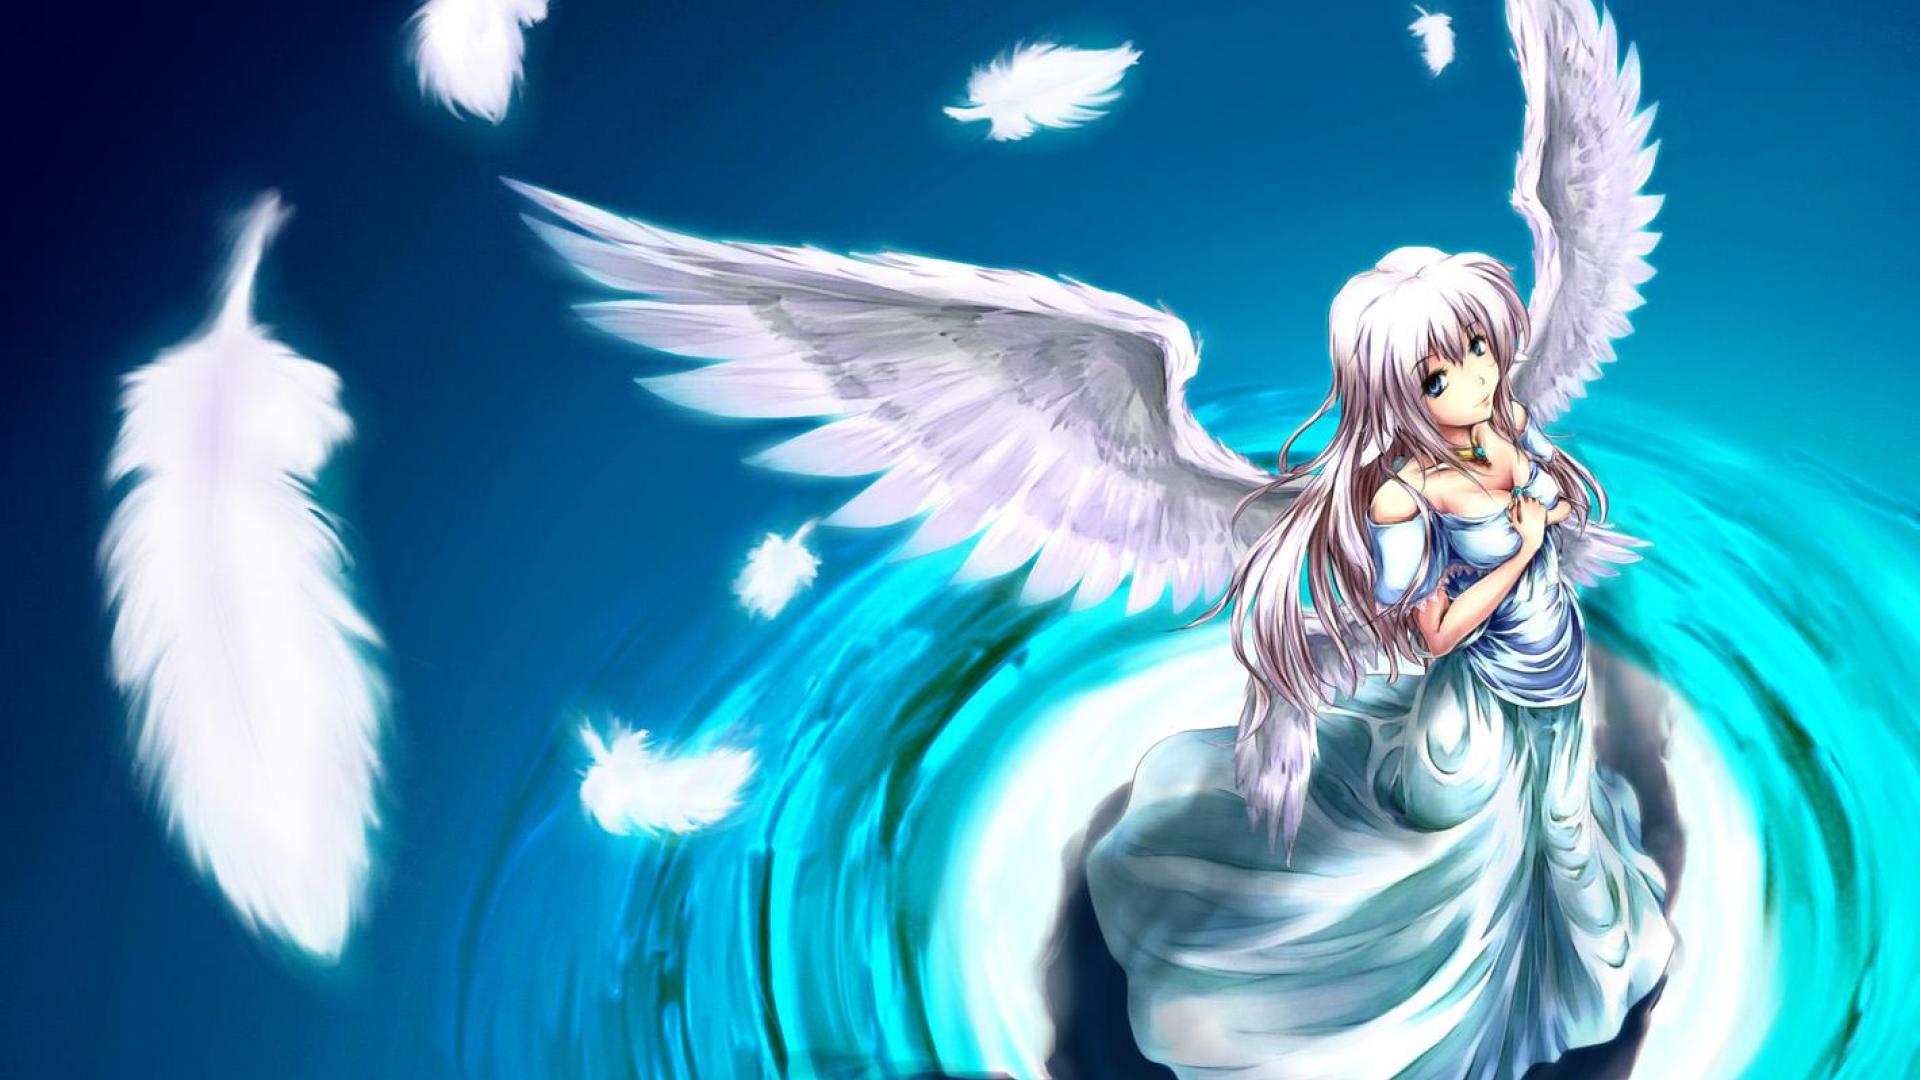 Anime Angel Wings Wallpaper Download .teahub.io